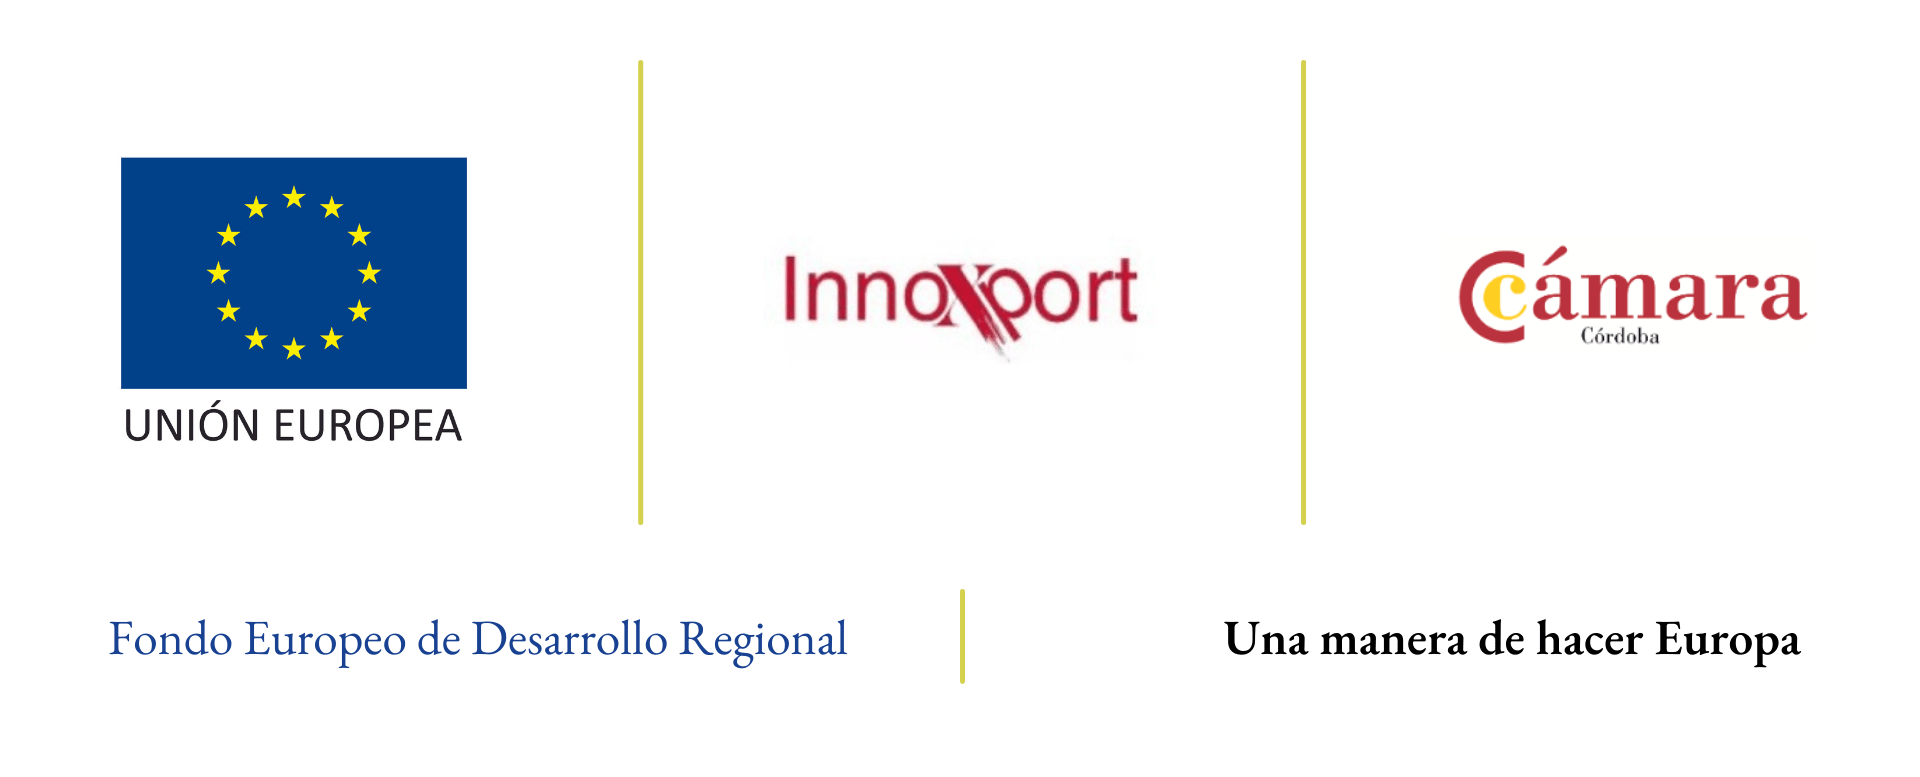 Logotipos Innoxport